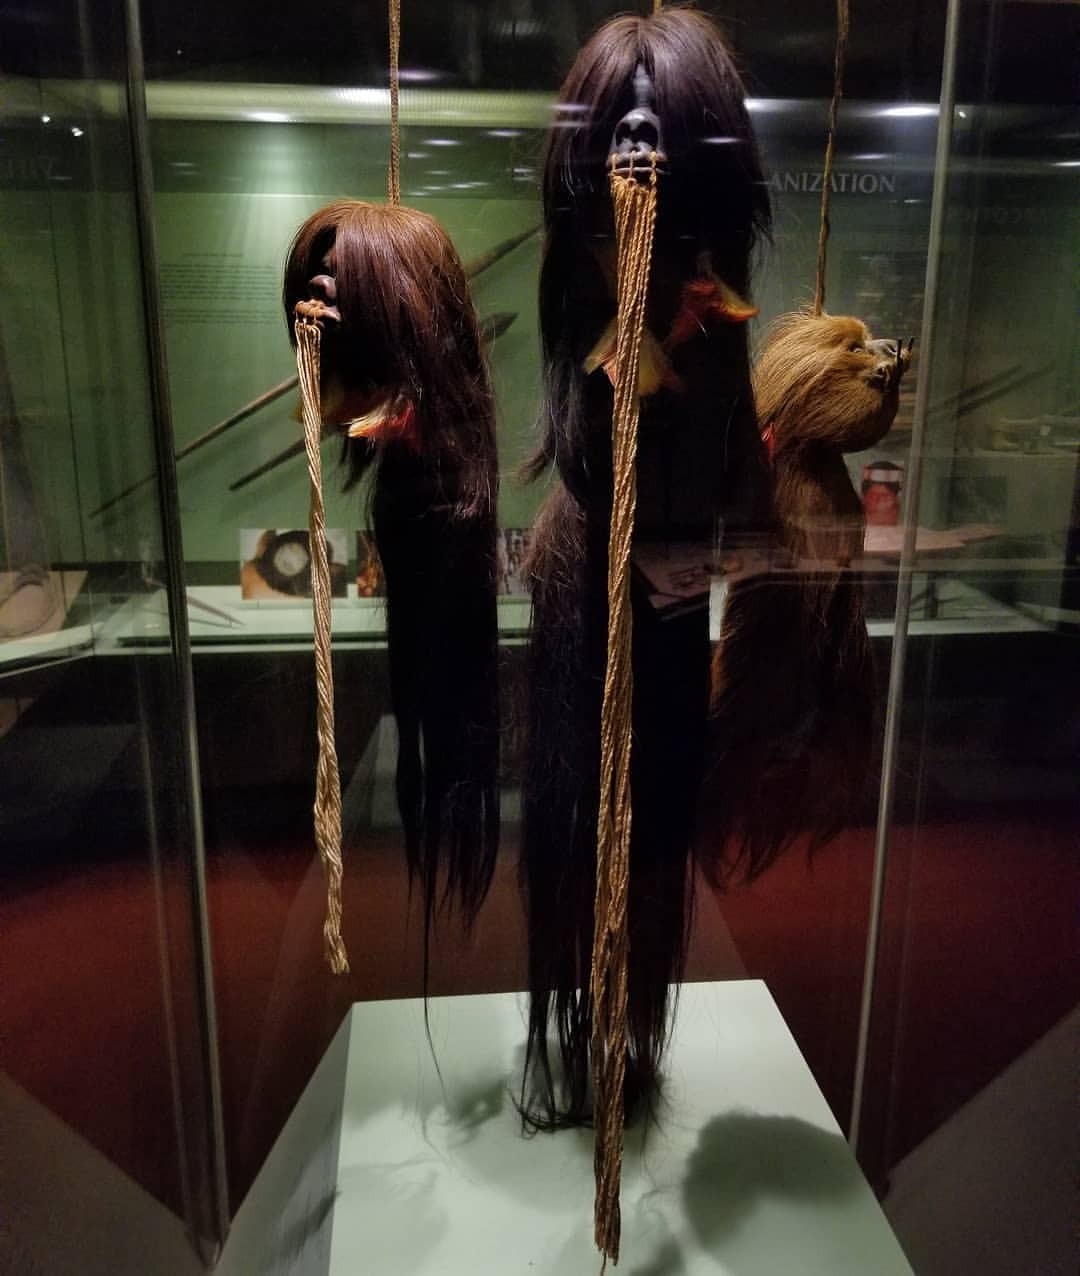 shrunken heads on display